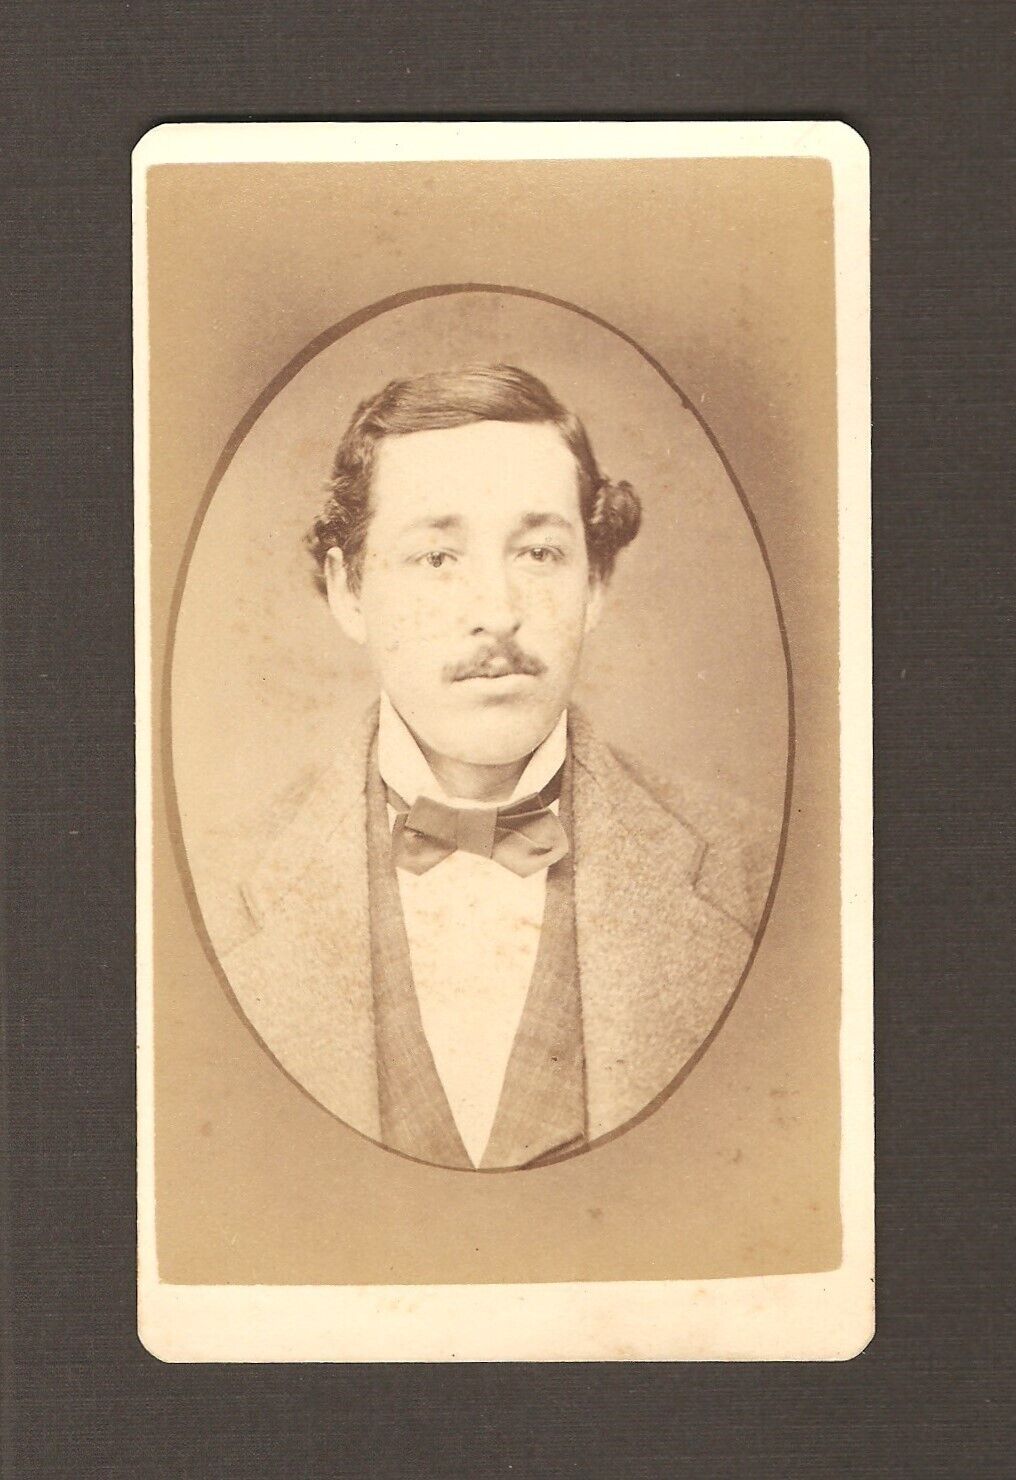 Old Vintage Antique CDV Photo Young Man Gentleman in Suit & Bowtie w/ Mustache